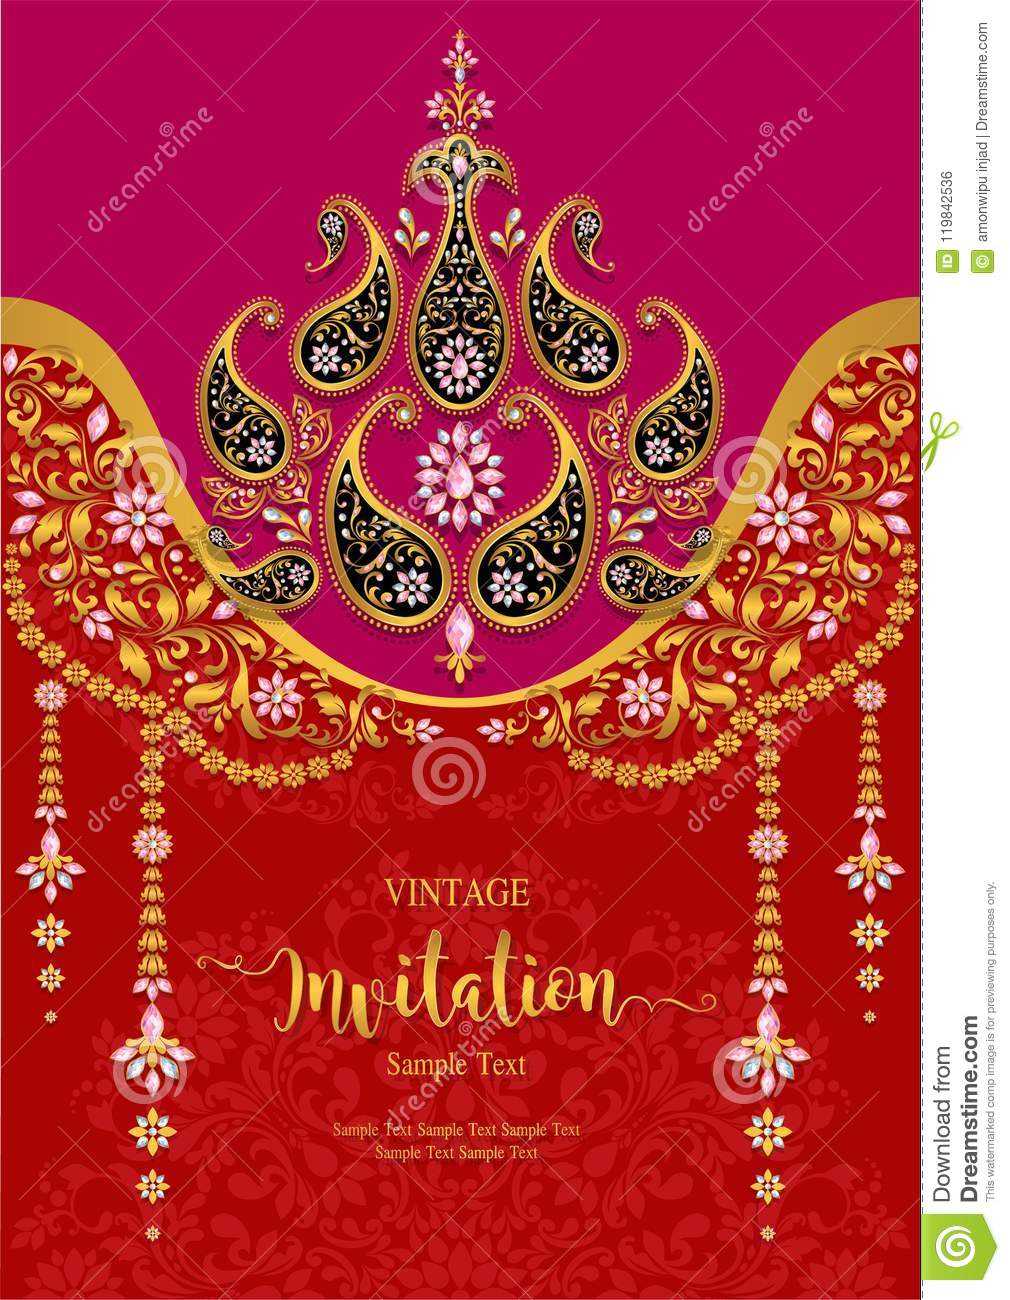 Wedding Invitation Card Templates . Stock Vector For Indian Wedding Cards Design Templates